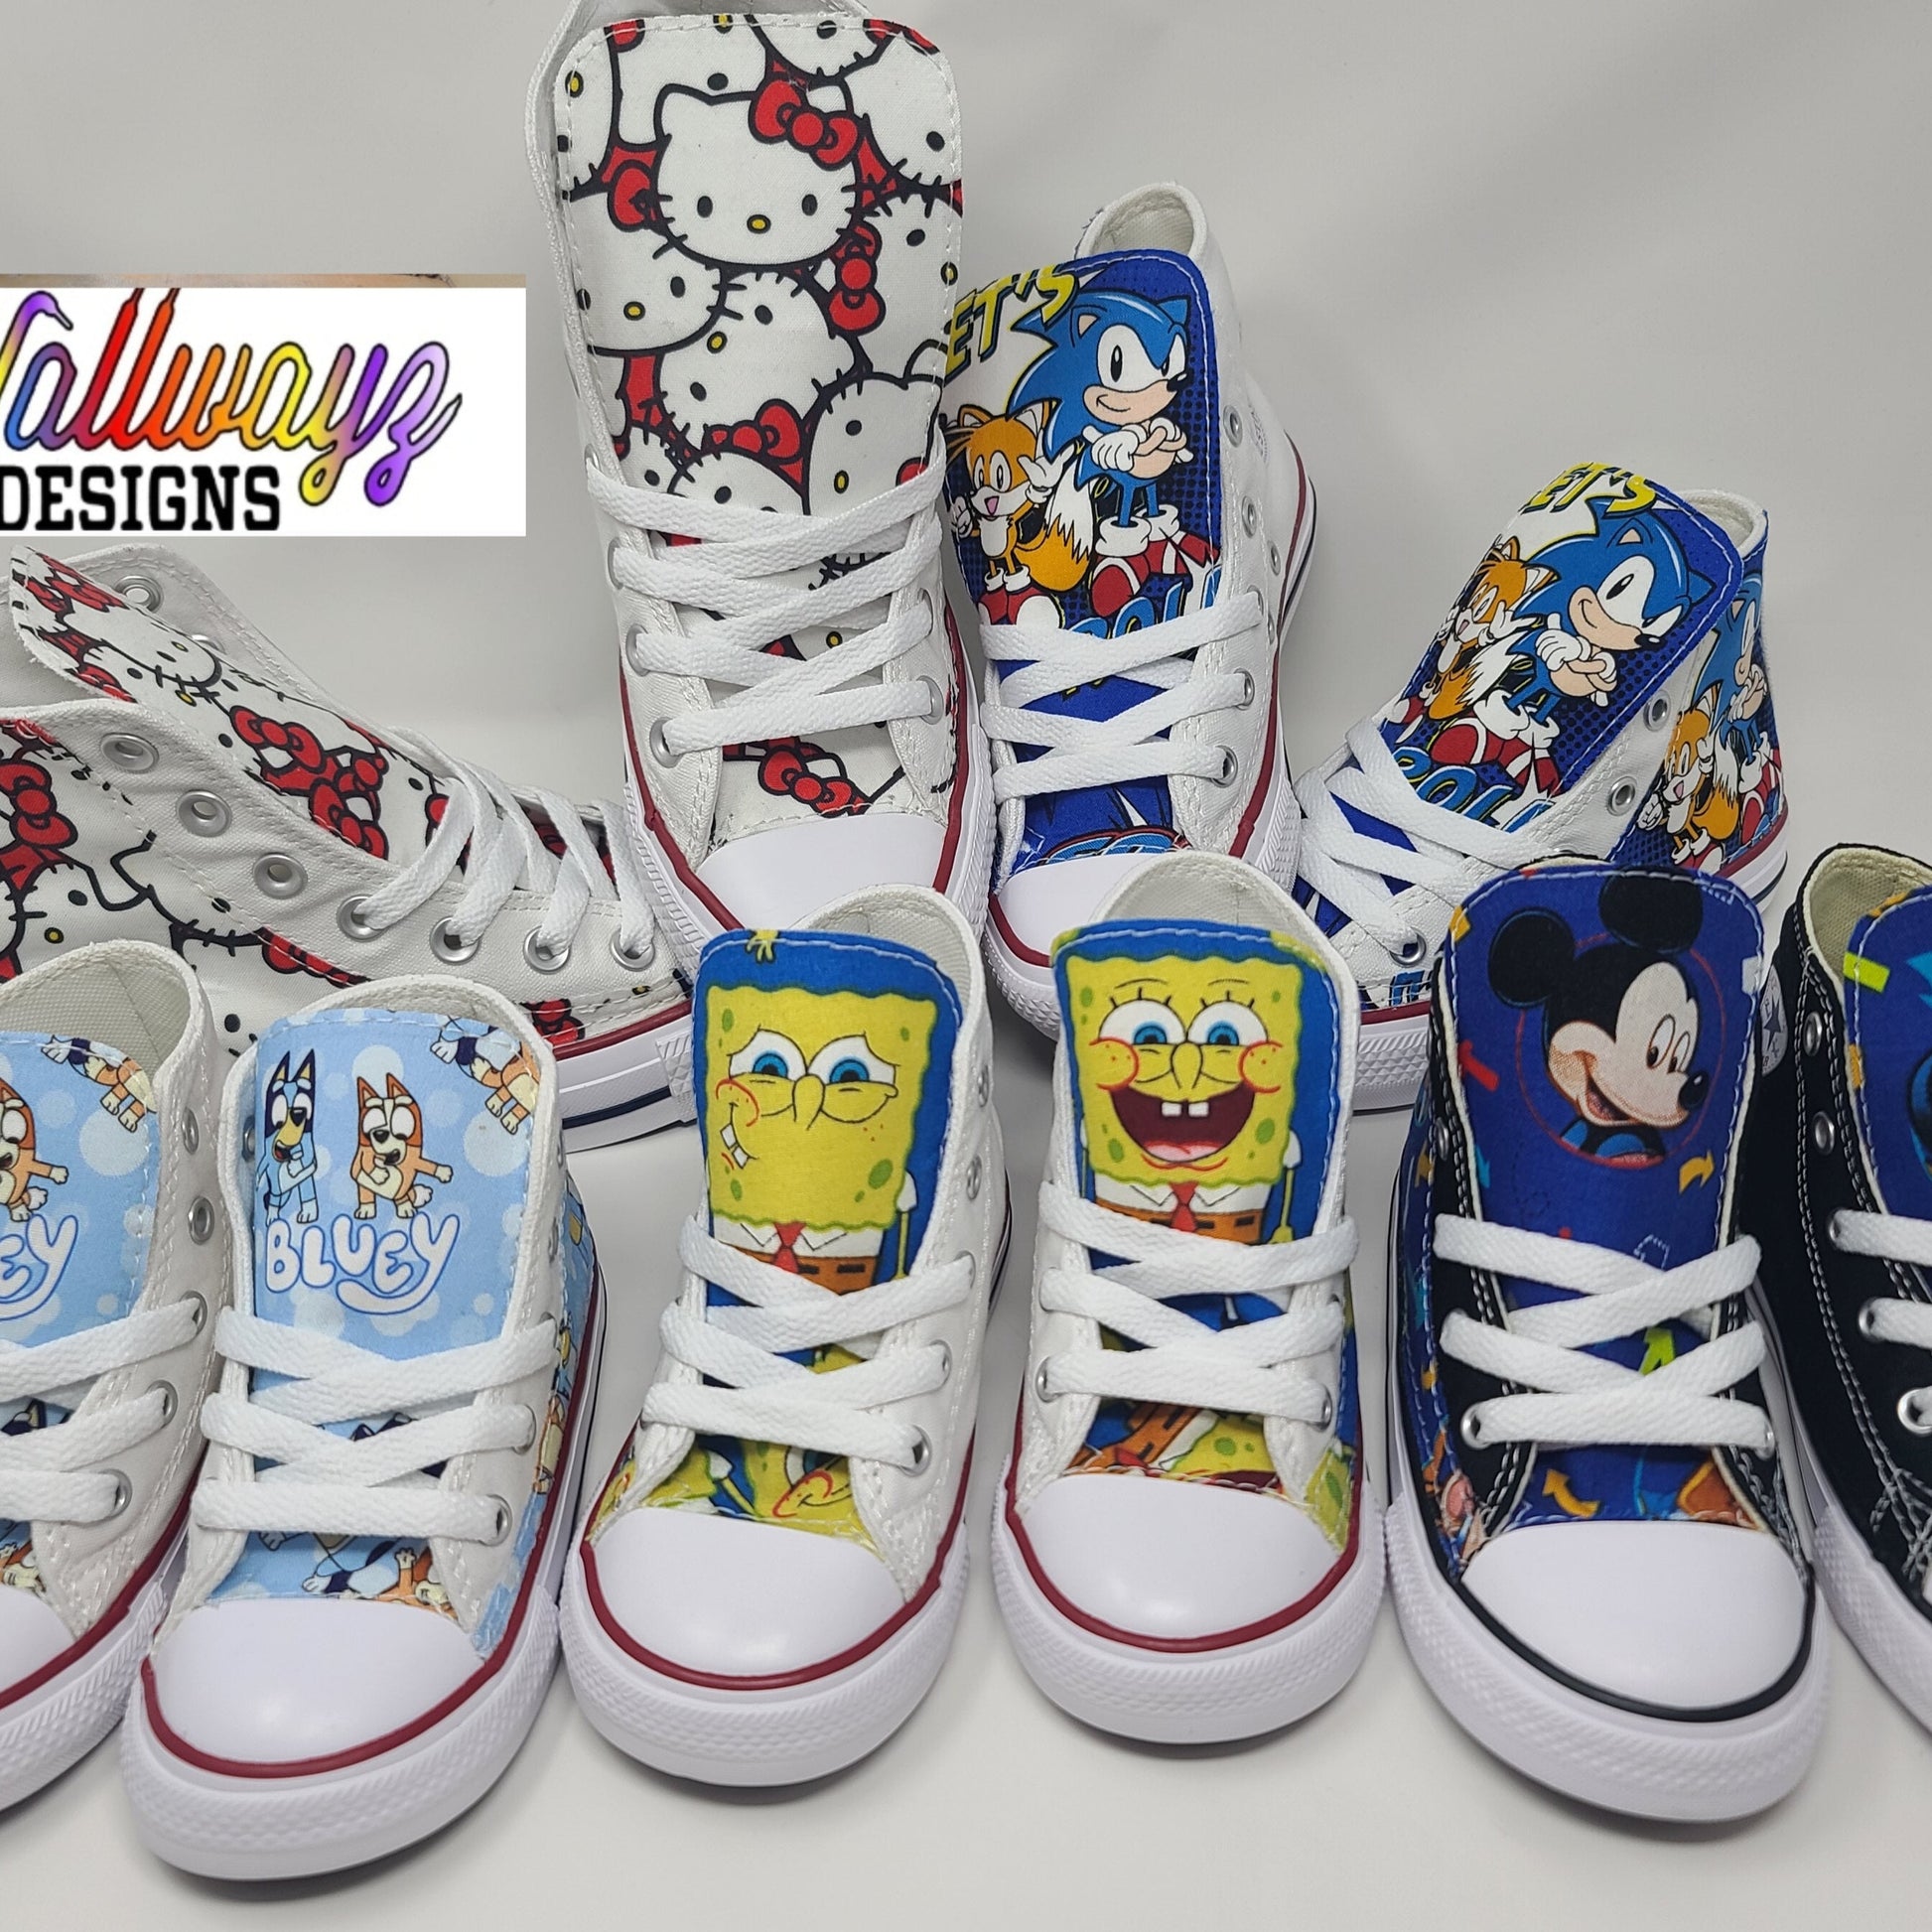 Kitty Converse Shoes – Hallwayz Designs